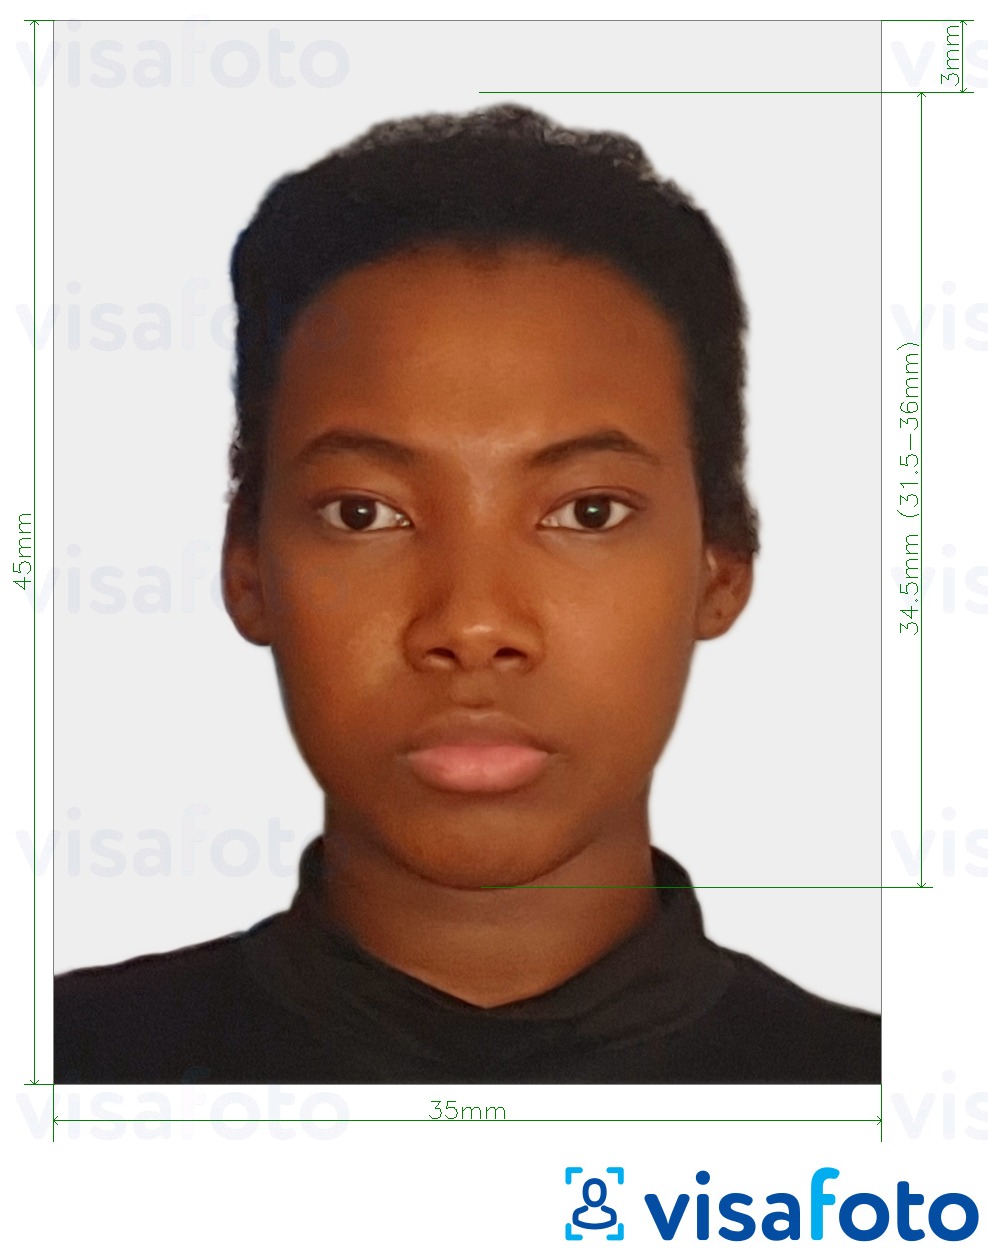 Contoh foto untuk Suriname visa dalam talian dengan spesifikasi saiz yang tepat.